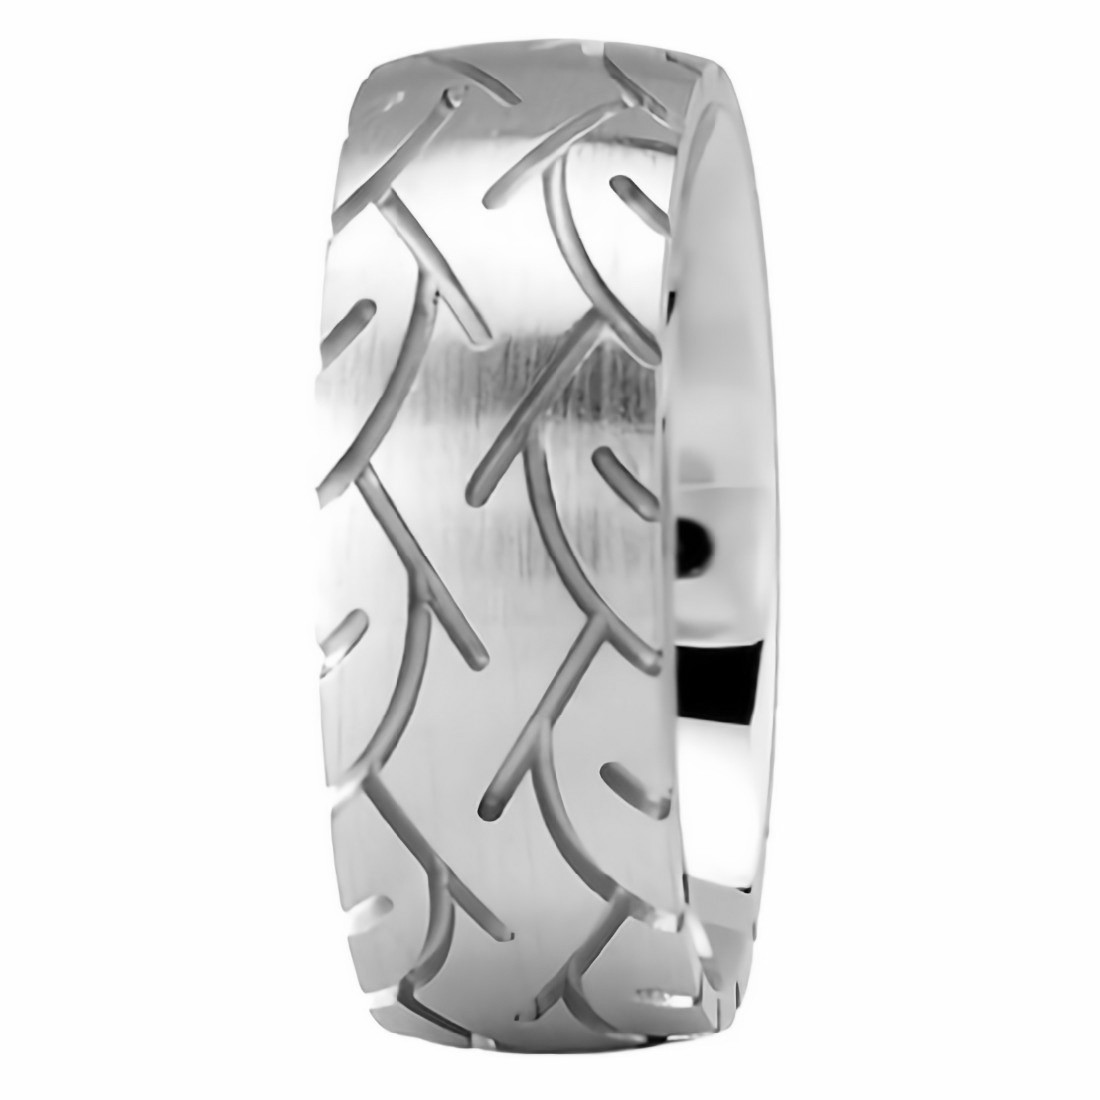 Street Bike 3-8mm Motocycle Tire Tread Ring - Sakcon Jewelers